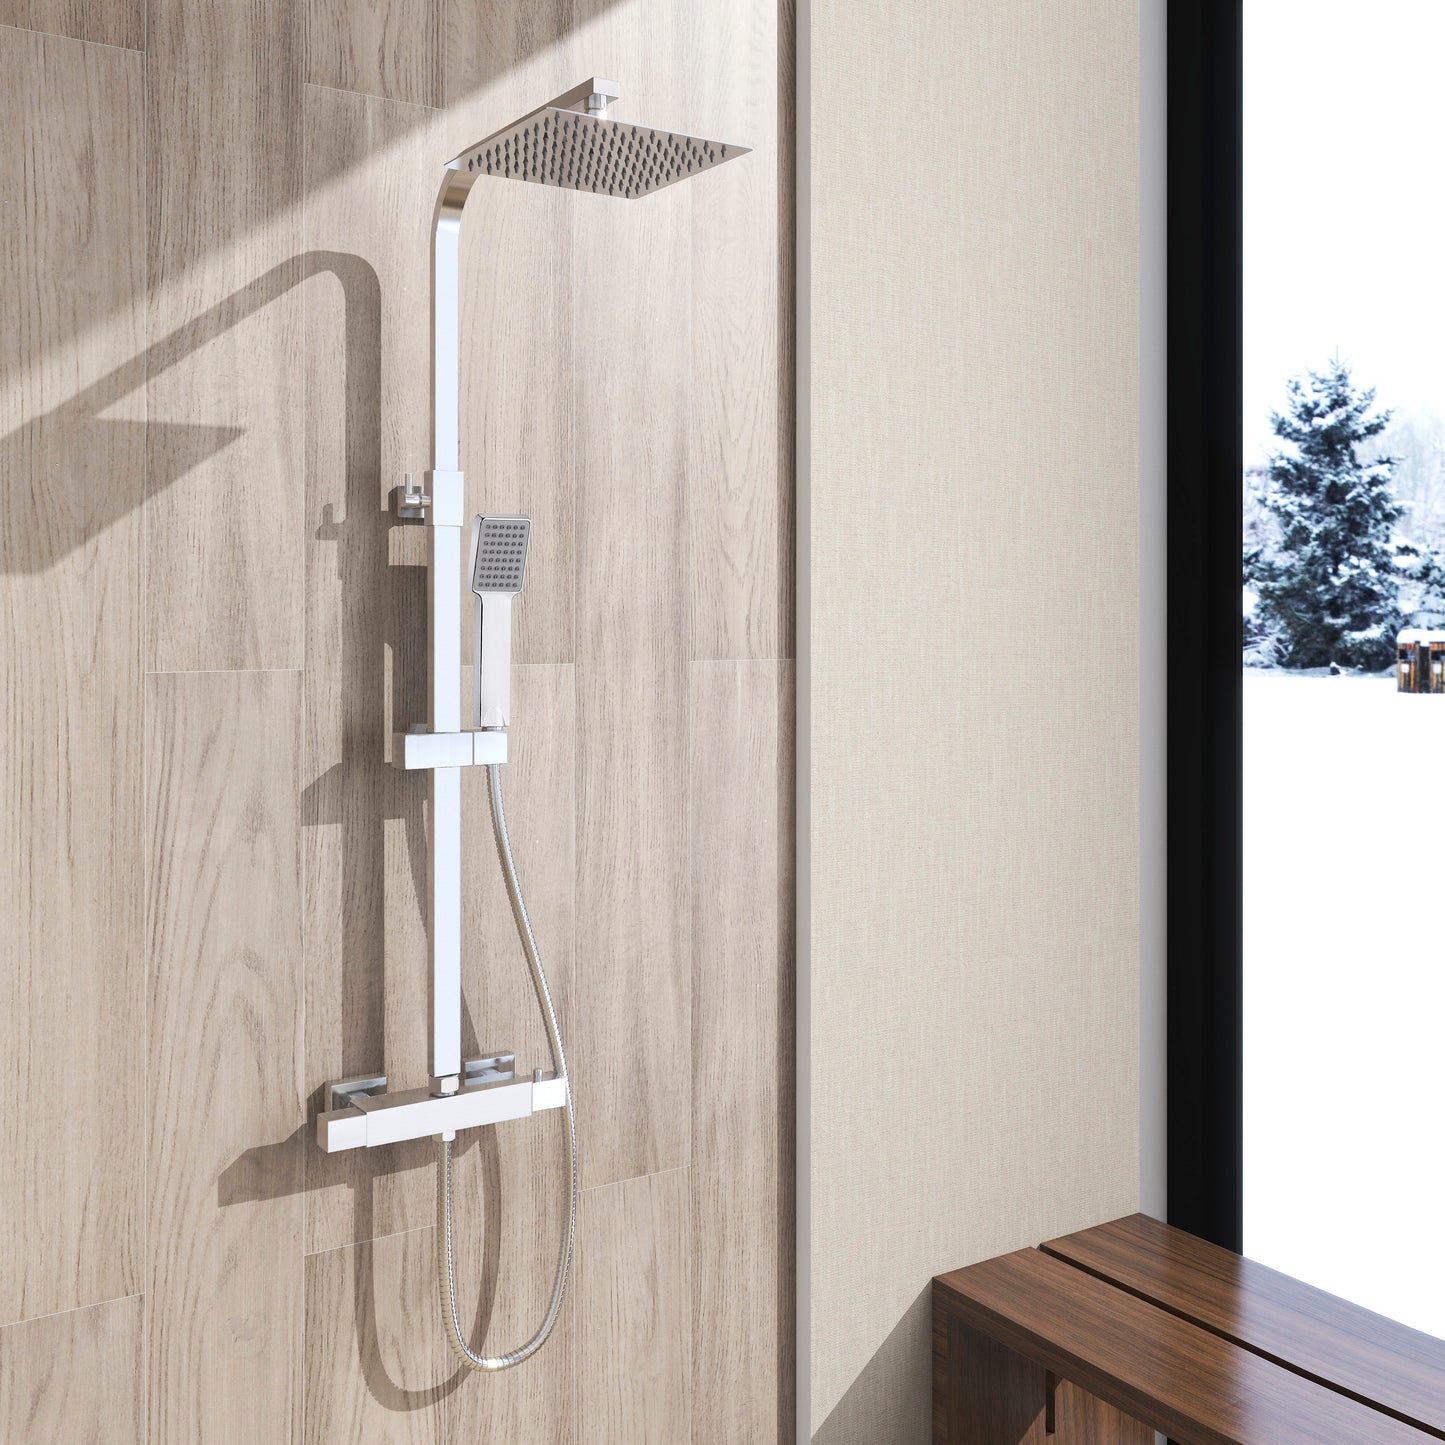 AICA NEW Bathroom Thermostatic Shower Mixer Overhead Rainfall Shower Head Set